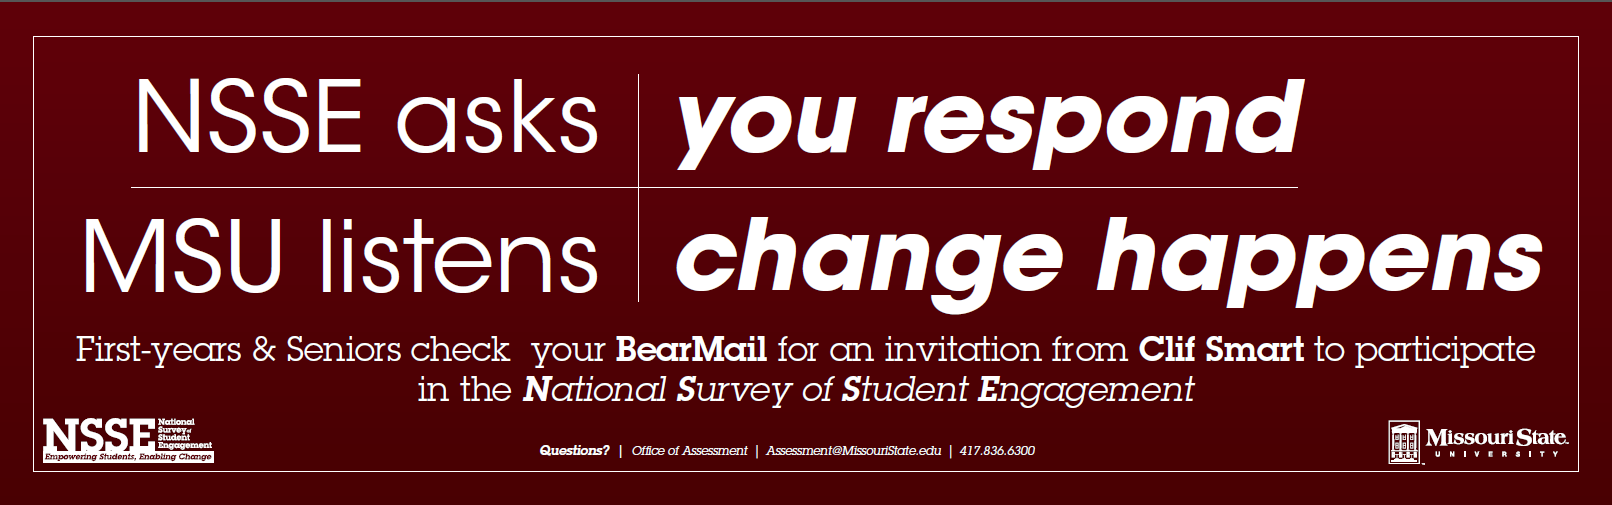 national survey on student engagement announcement